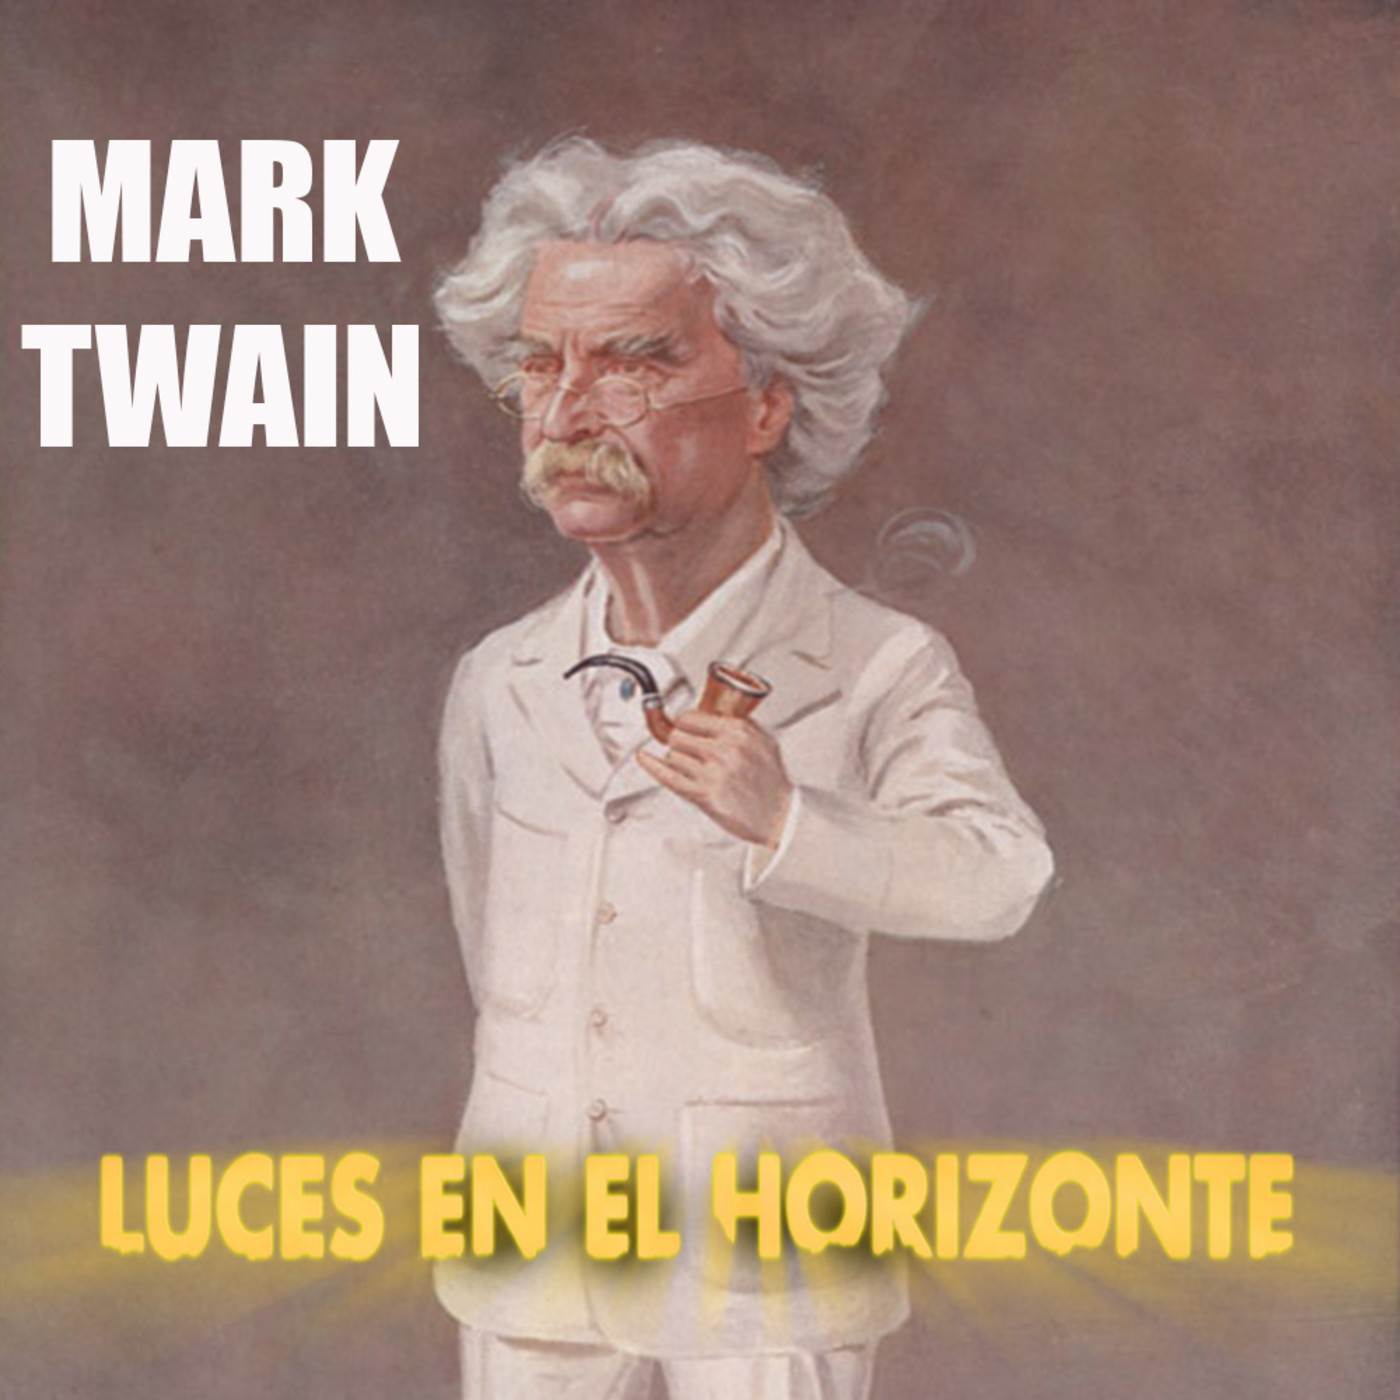 MARK TWAIN, el padre de Tom Sawyer - Luces en el Horizonte